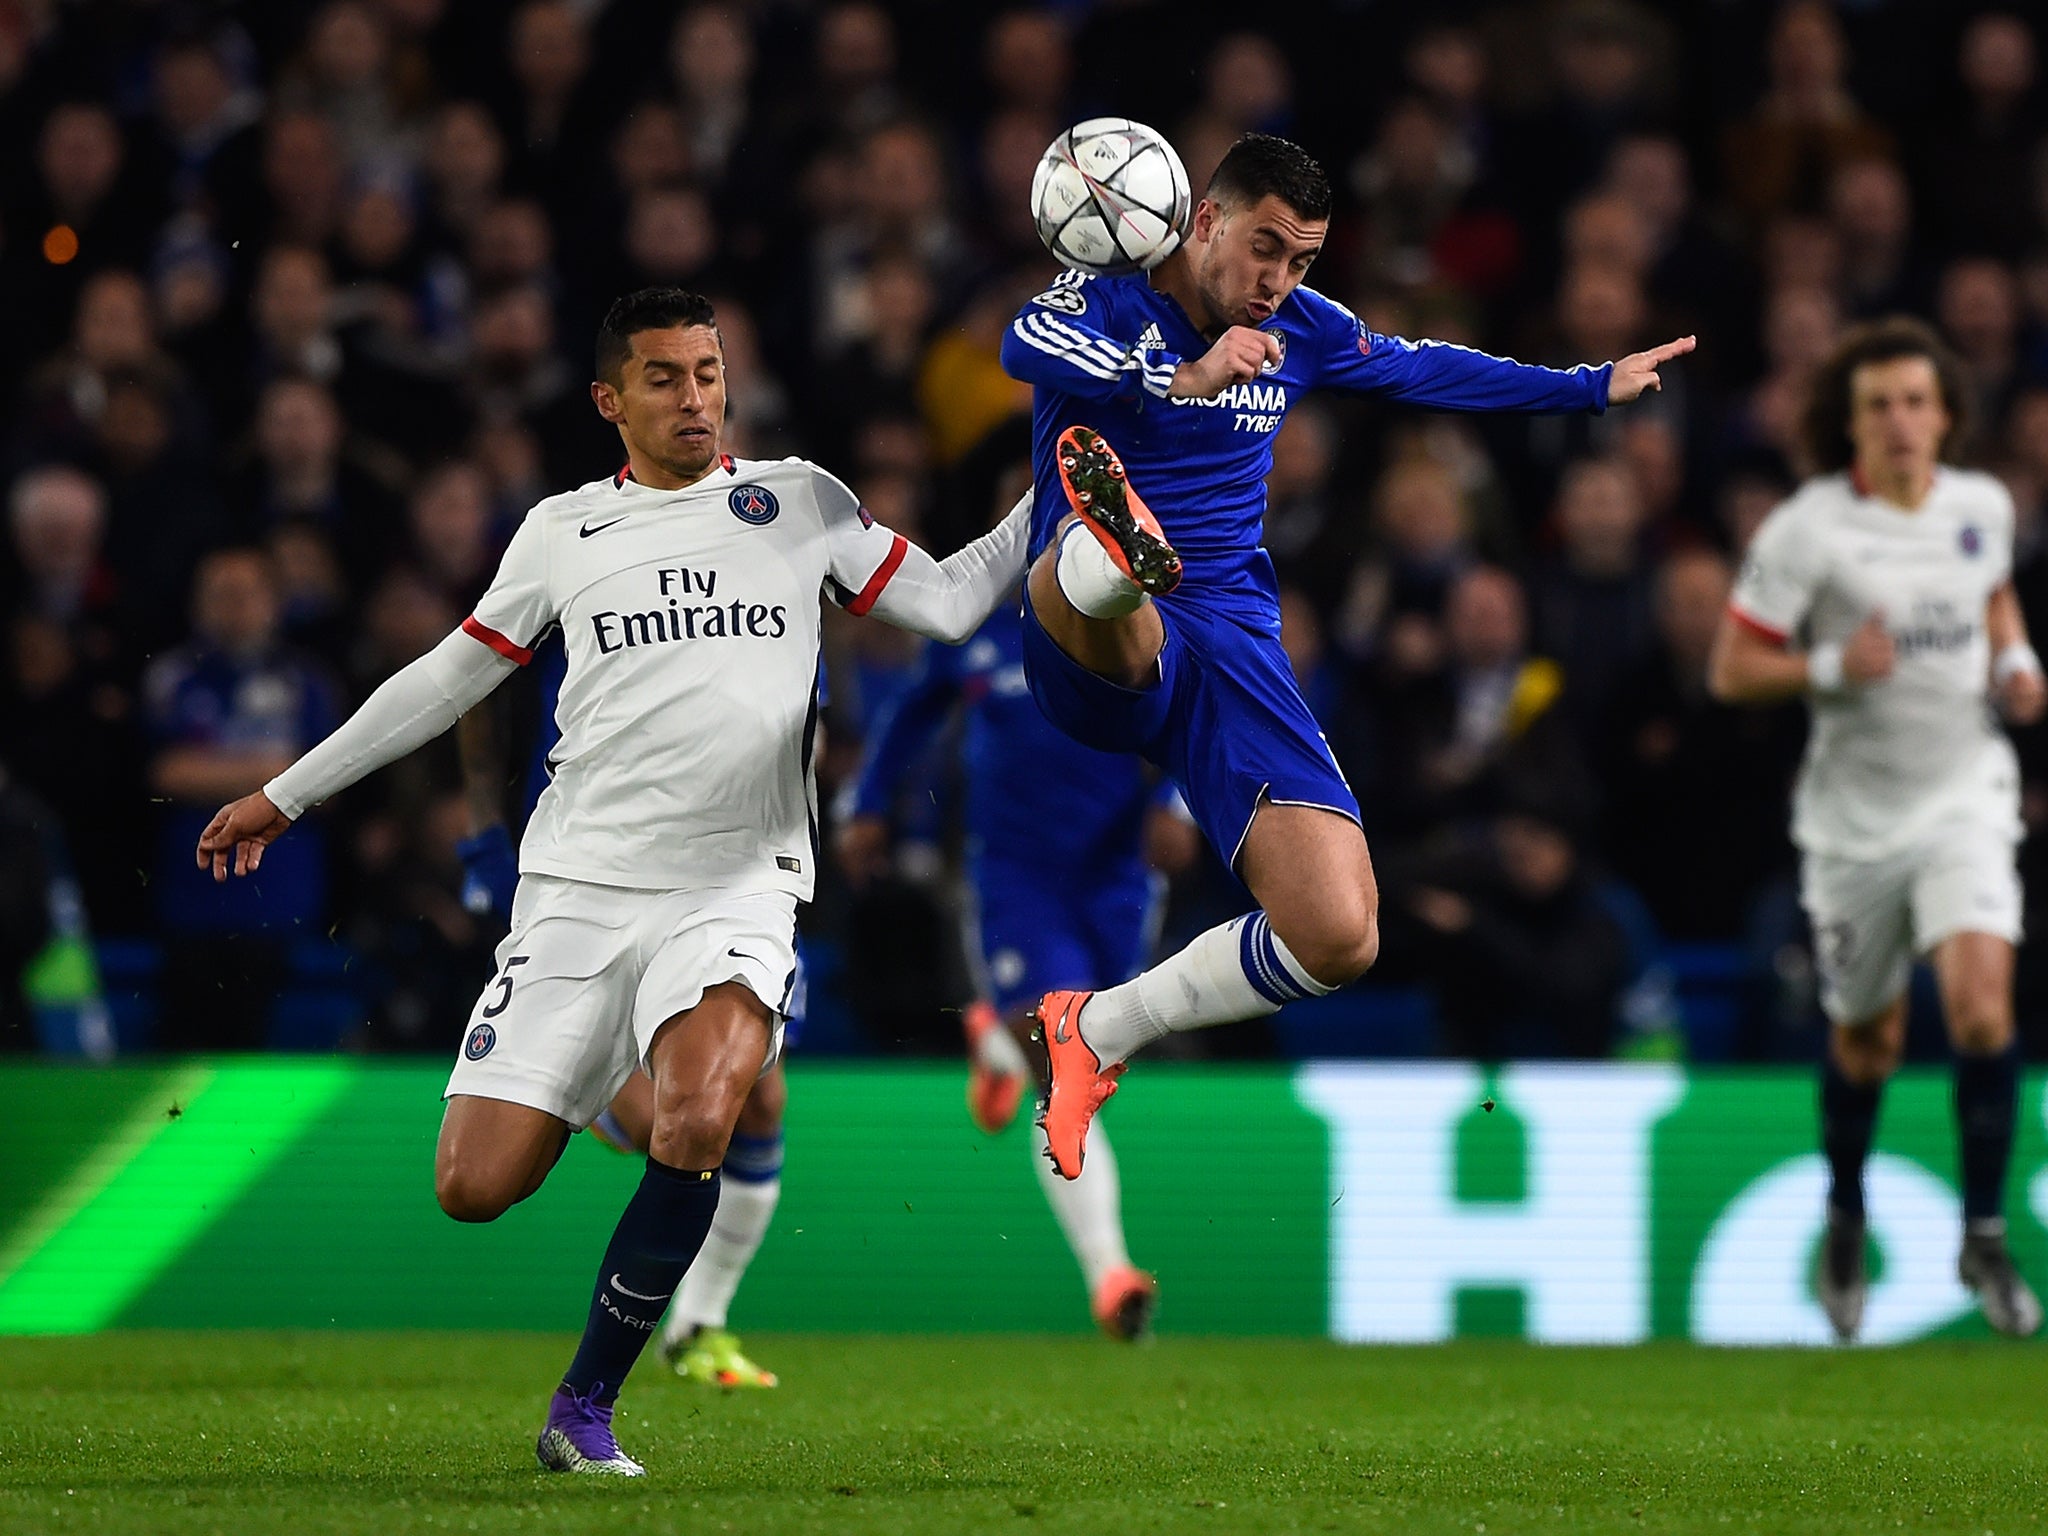 Chelsea vs PSG LIVE! Latest score and updates as Zlatan Ibrahimovic